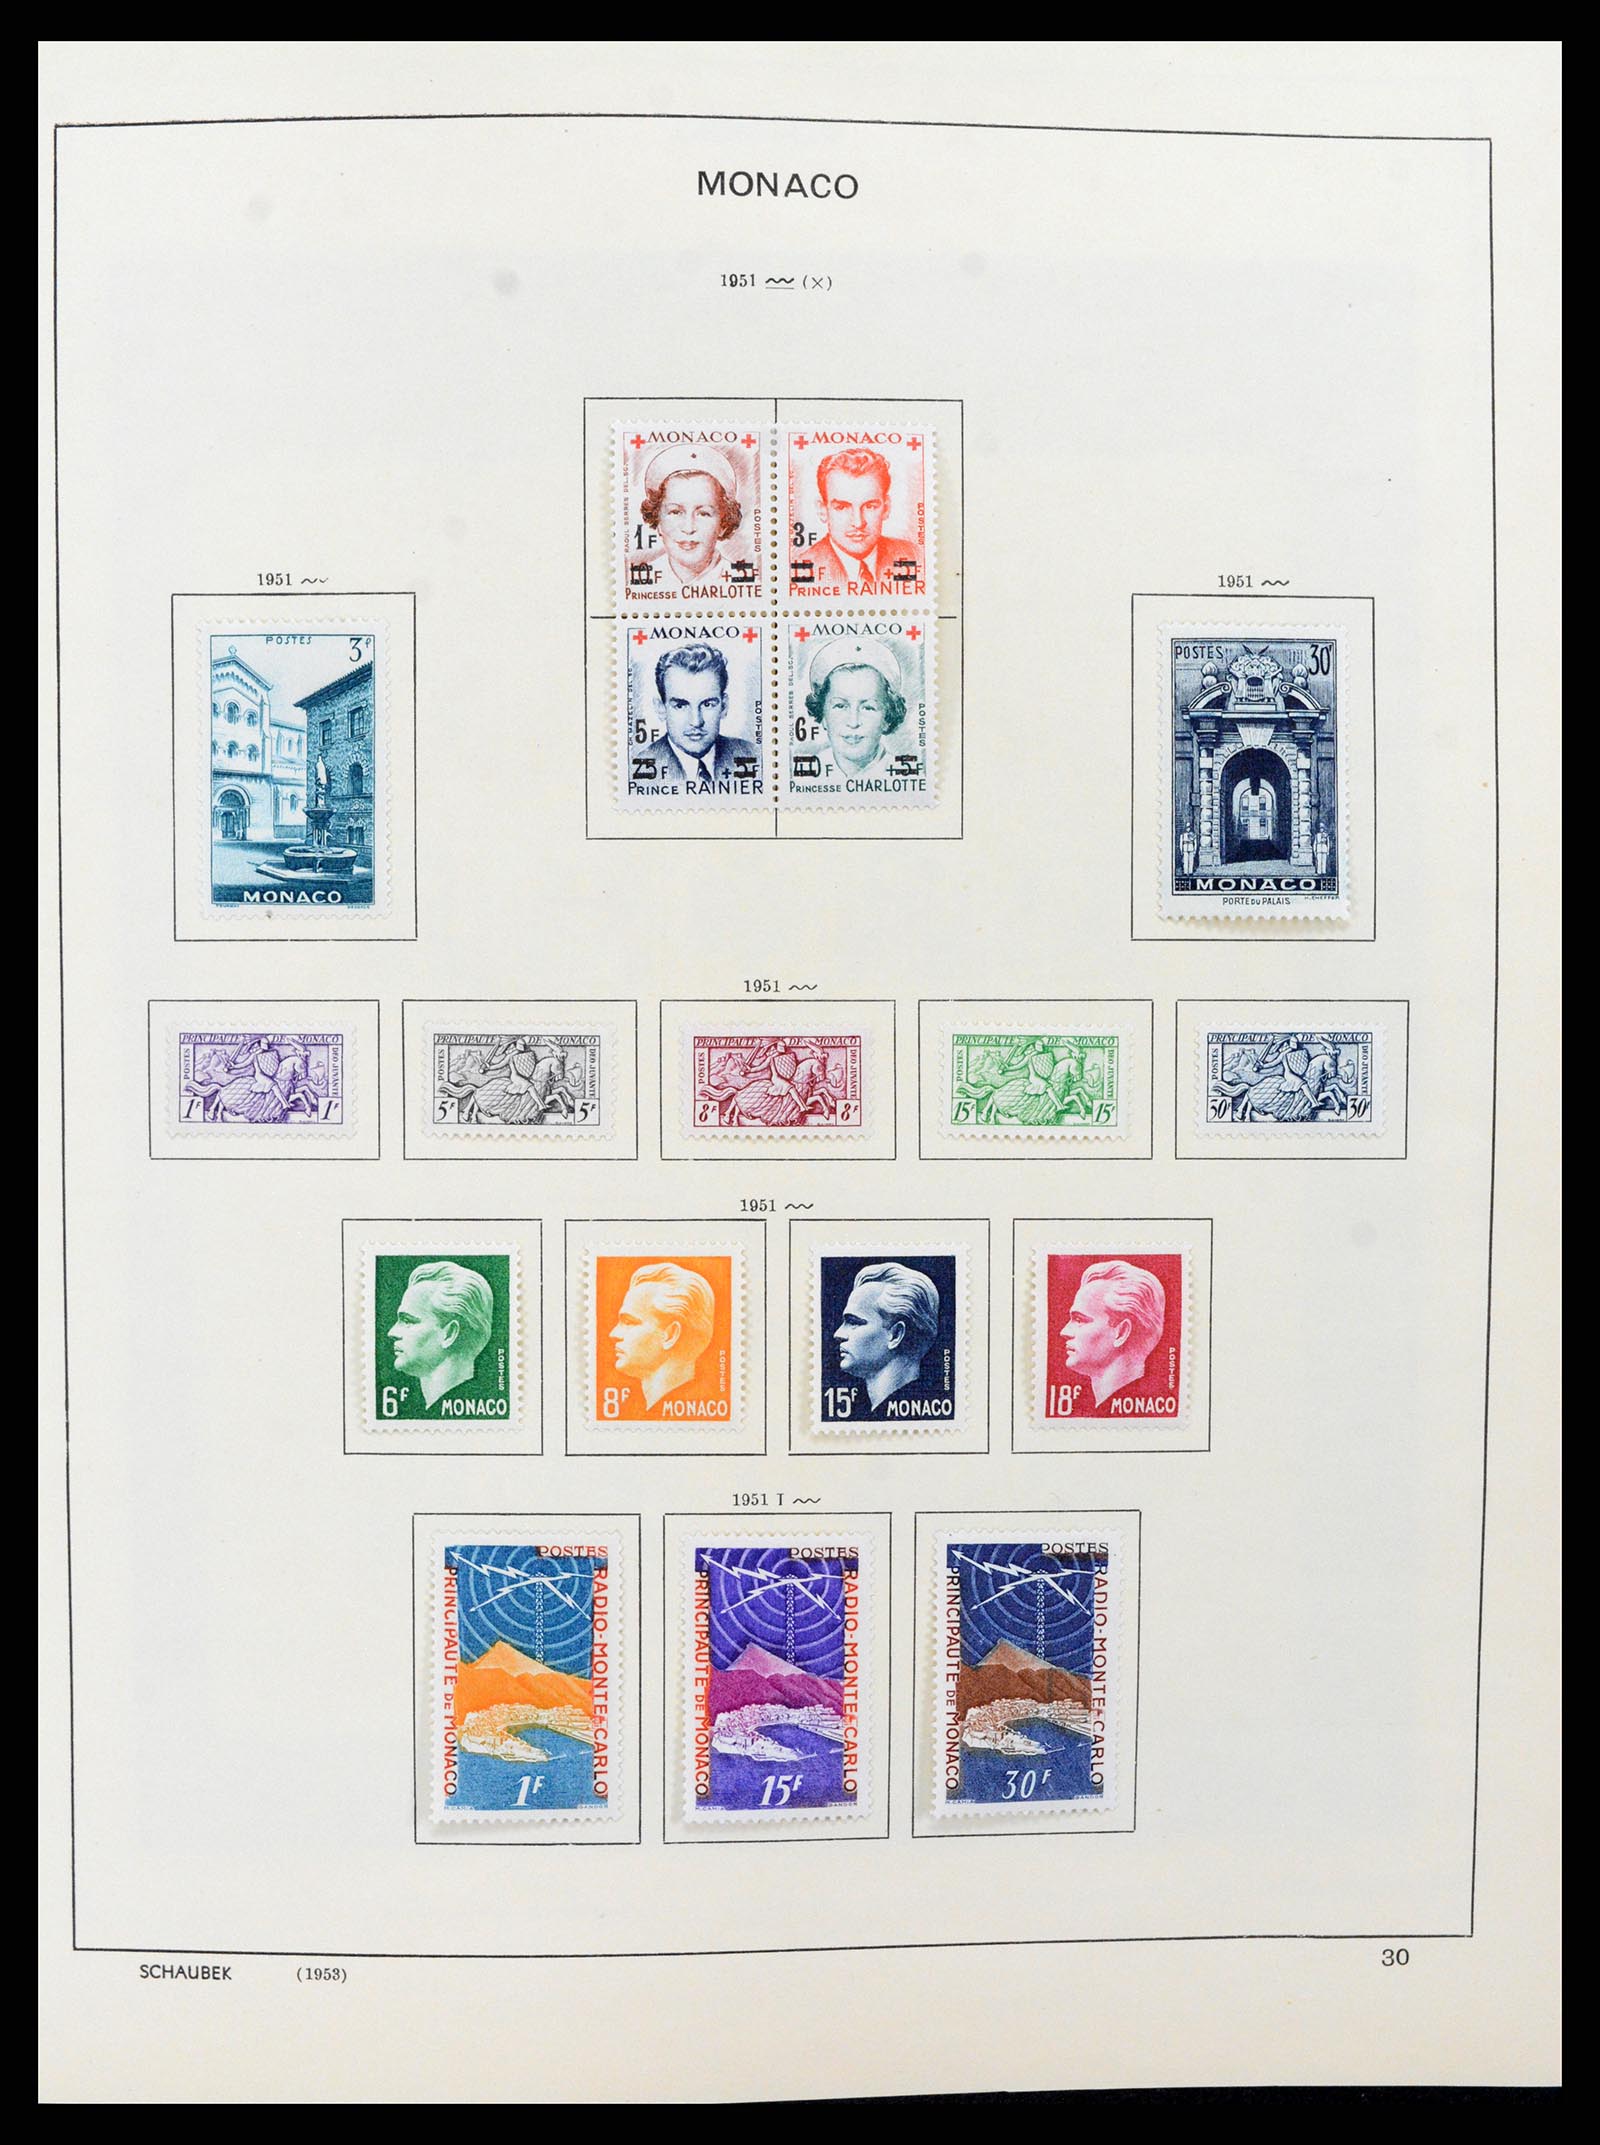 37570 033 - Stamp collection 37570 Monaco 1885-2013.